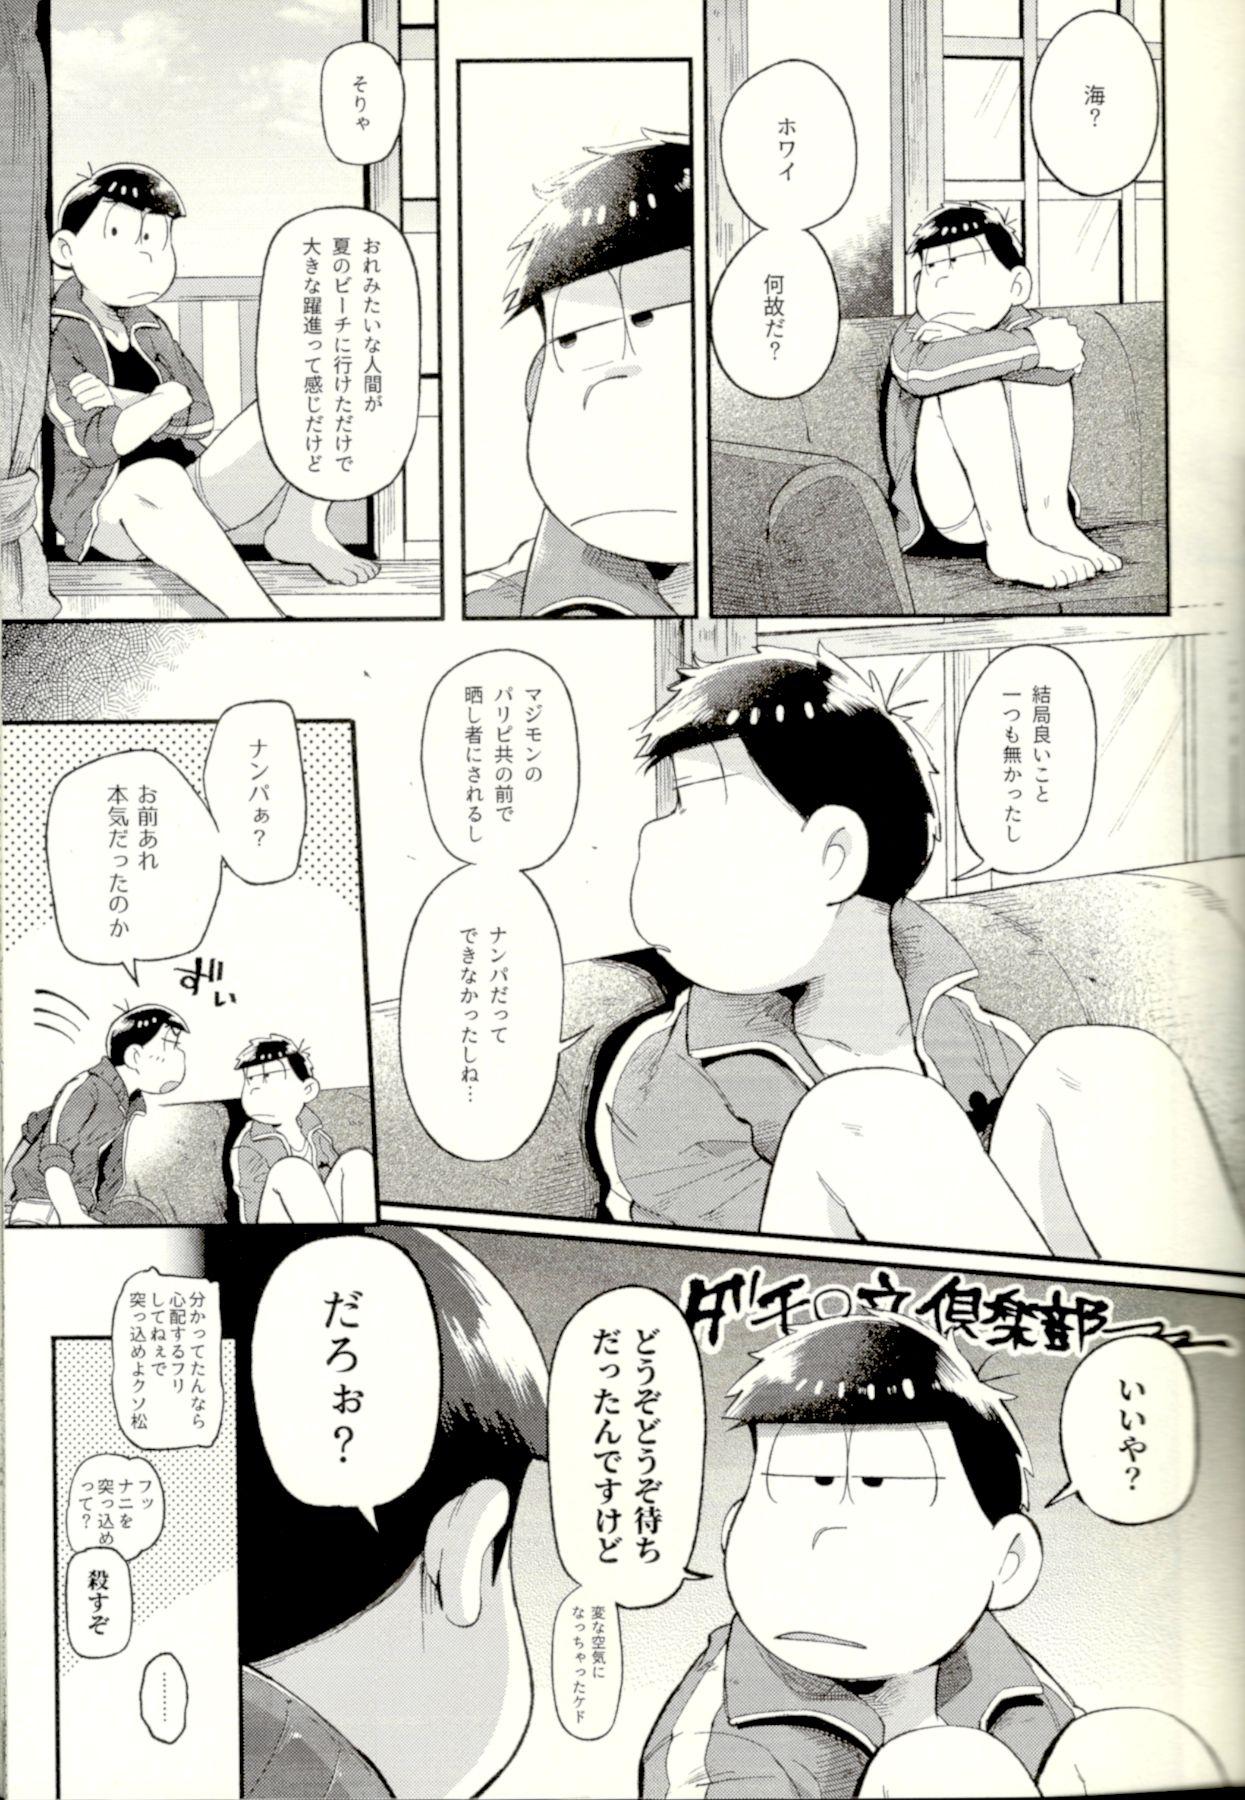 Gaydudes Season in the Summer - Osomatsu-san Desnuda - Page 7